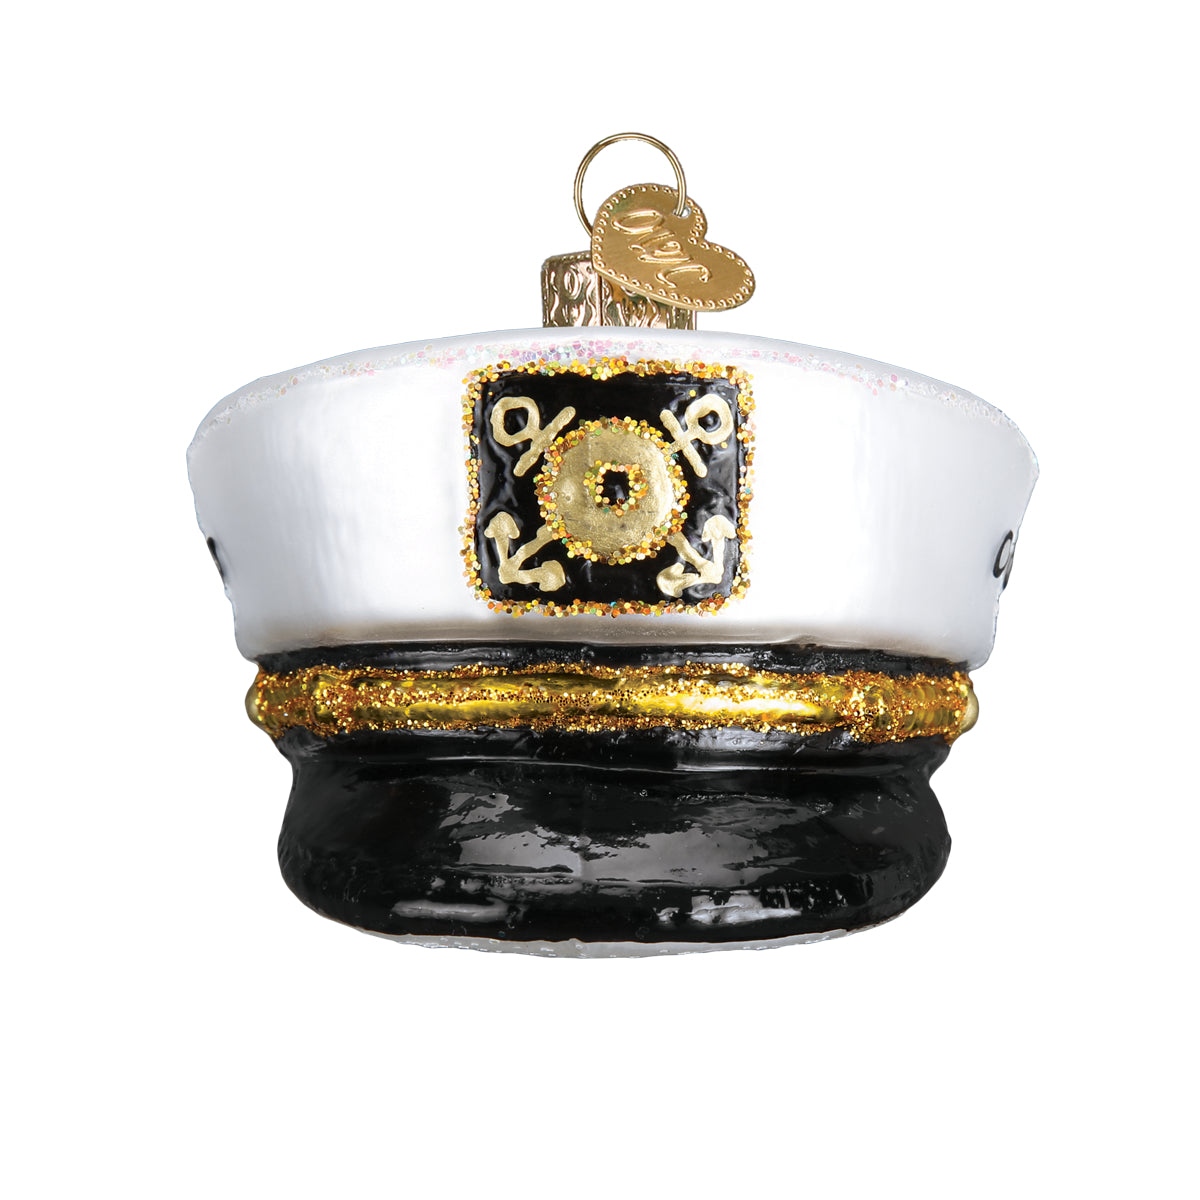 Captain's Cap Ornament